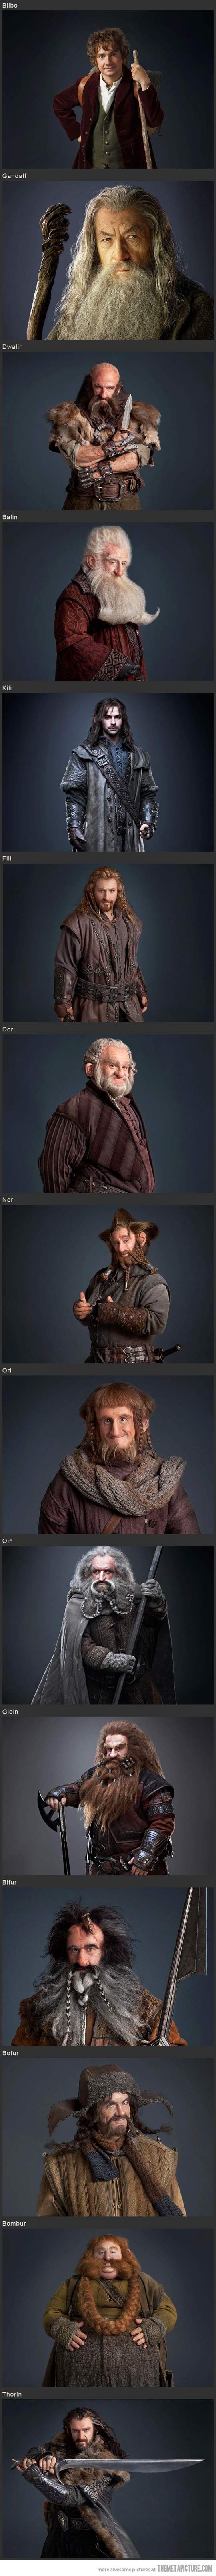 The-Hobbit-characters-movie.jpg